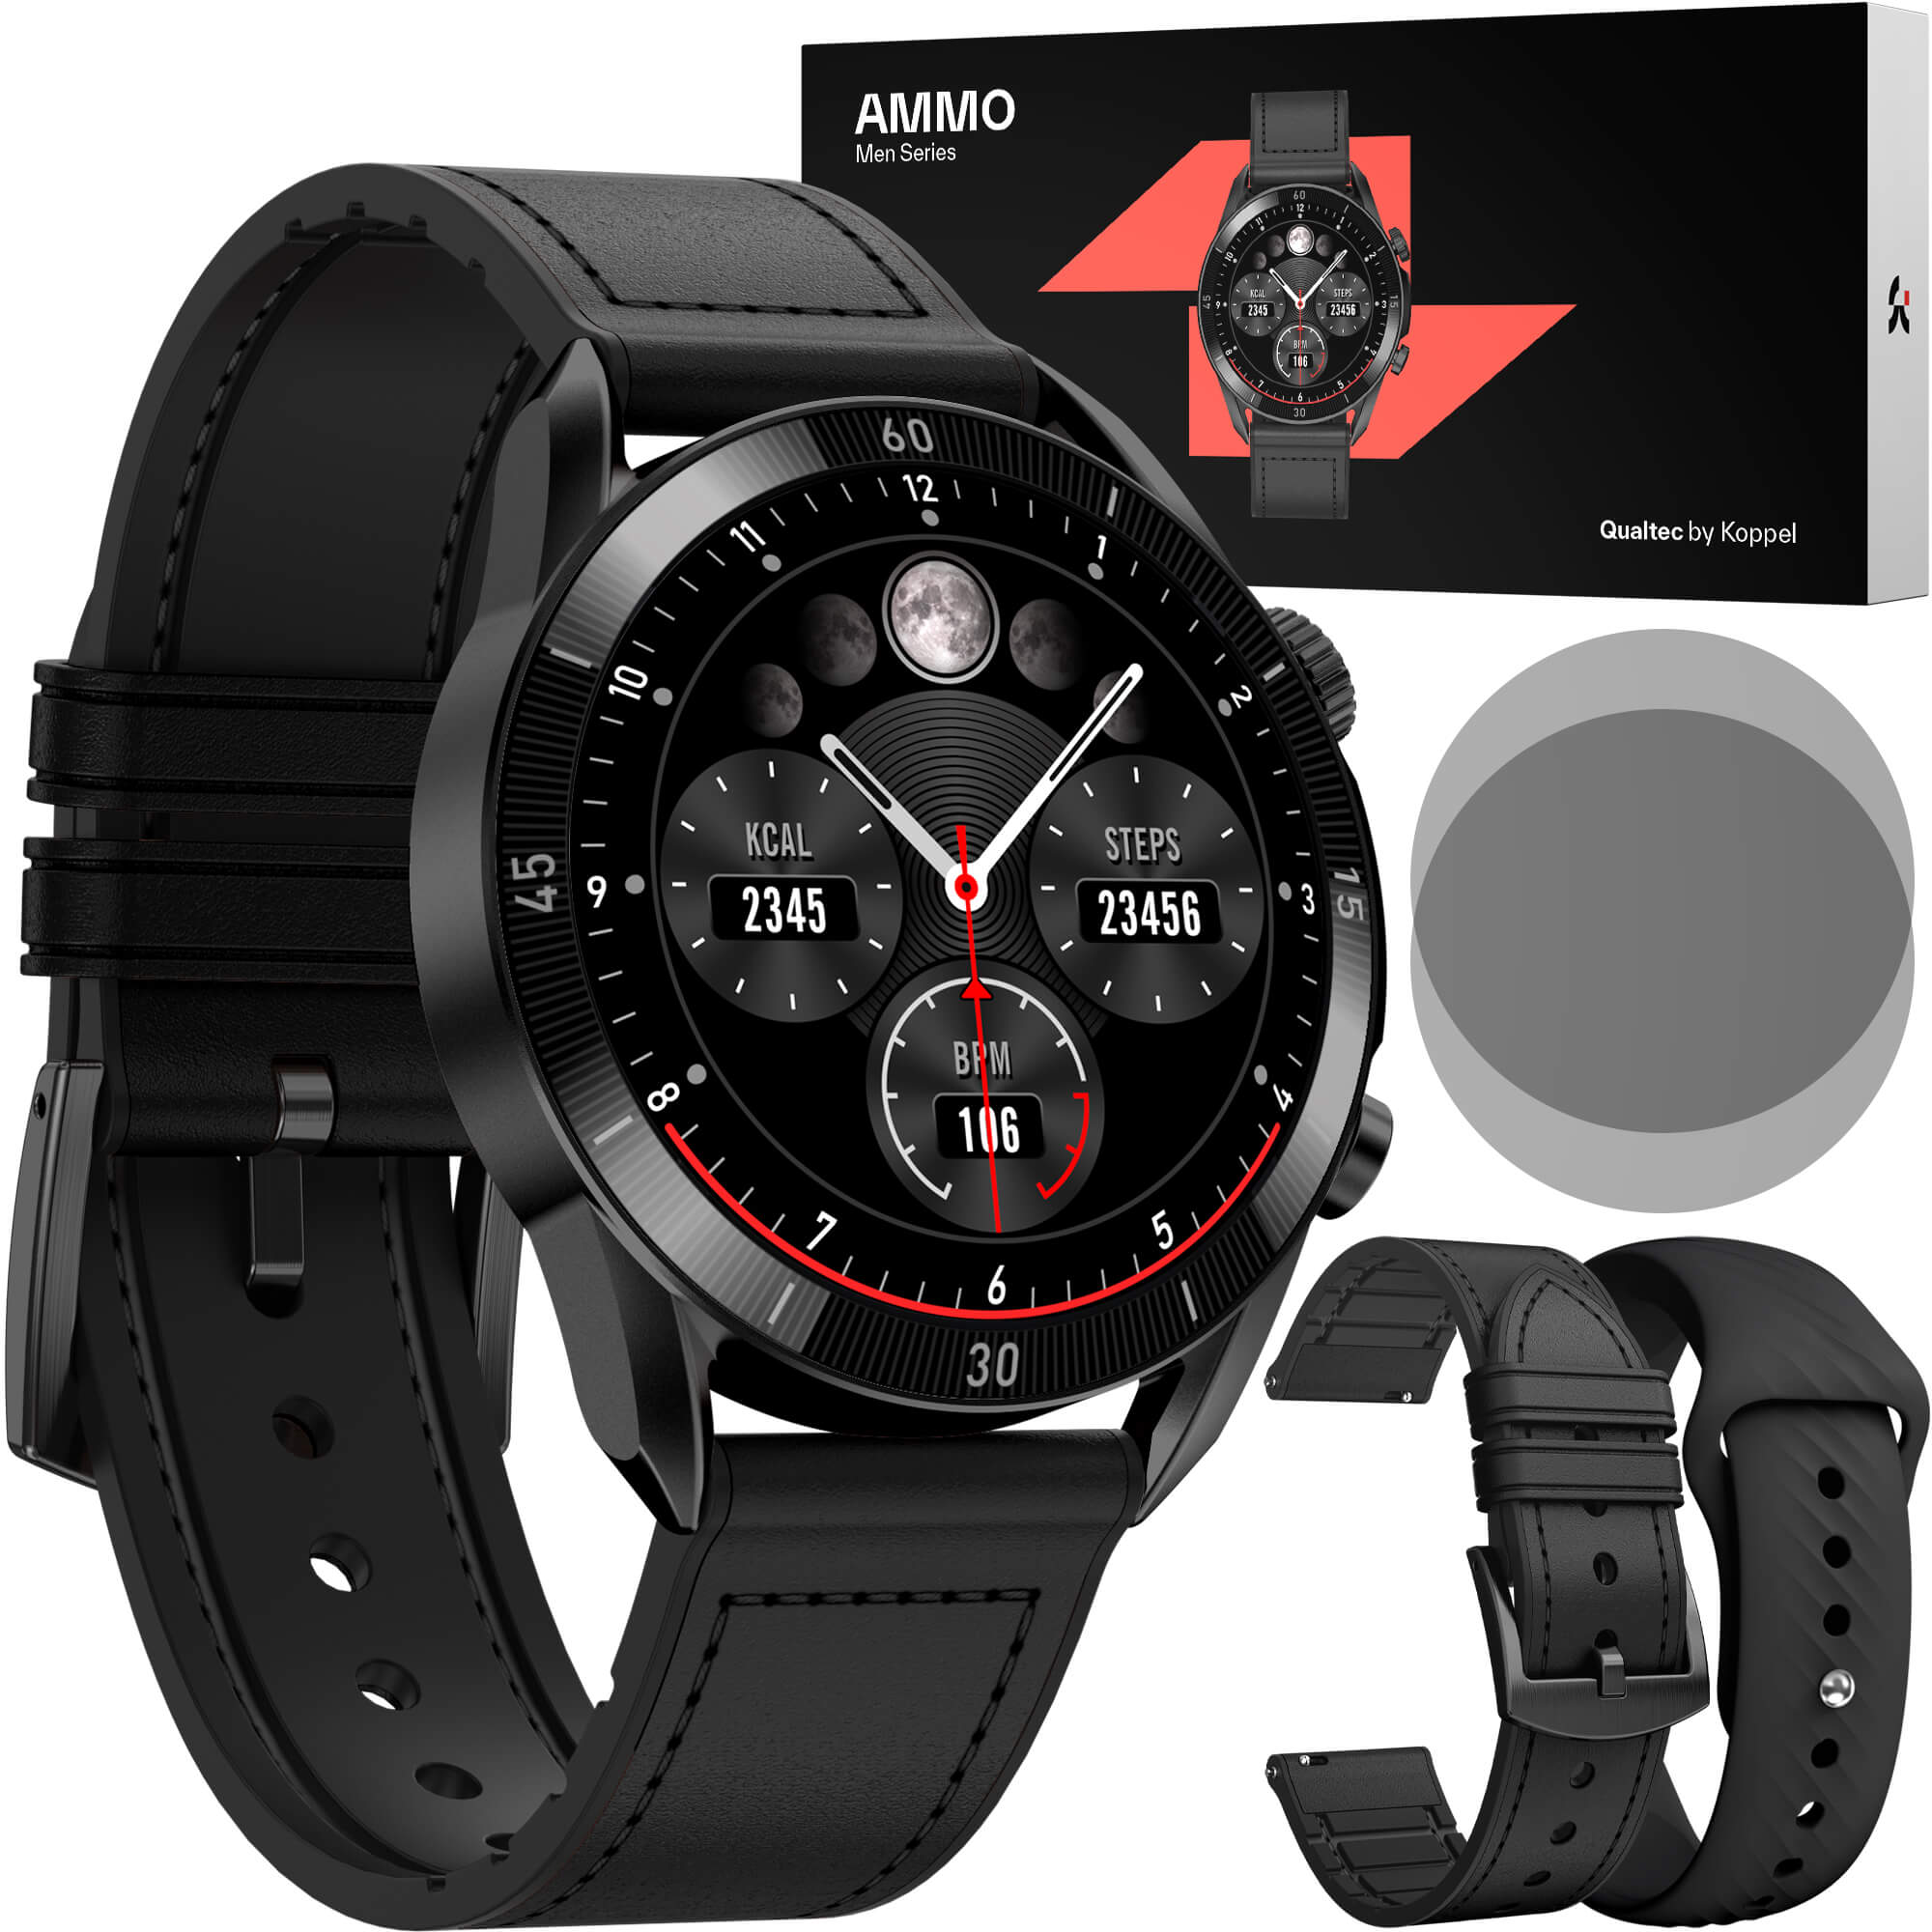 ceas smartwatch barbati AMMO Men Series Qualtec by Koppel continut pachet